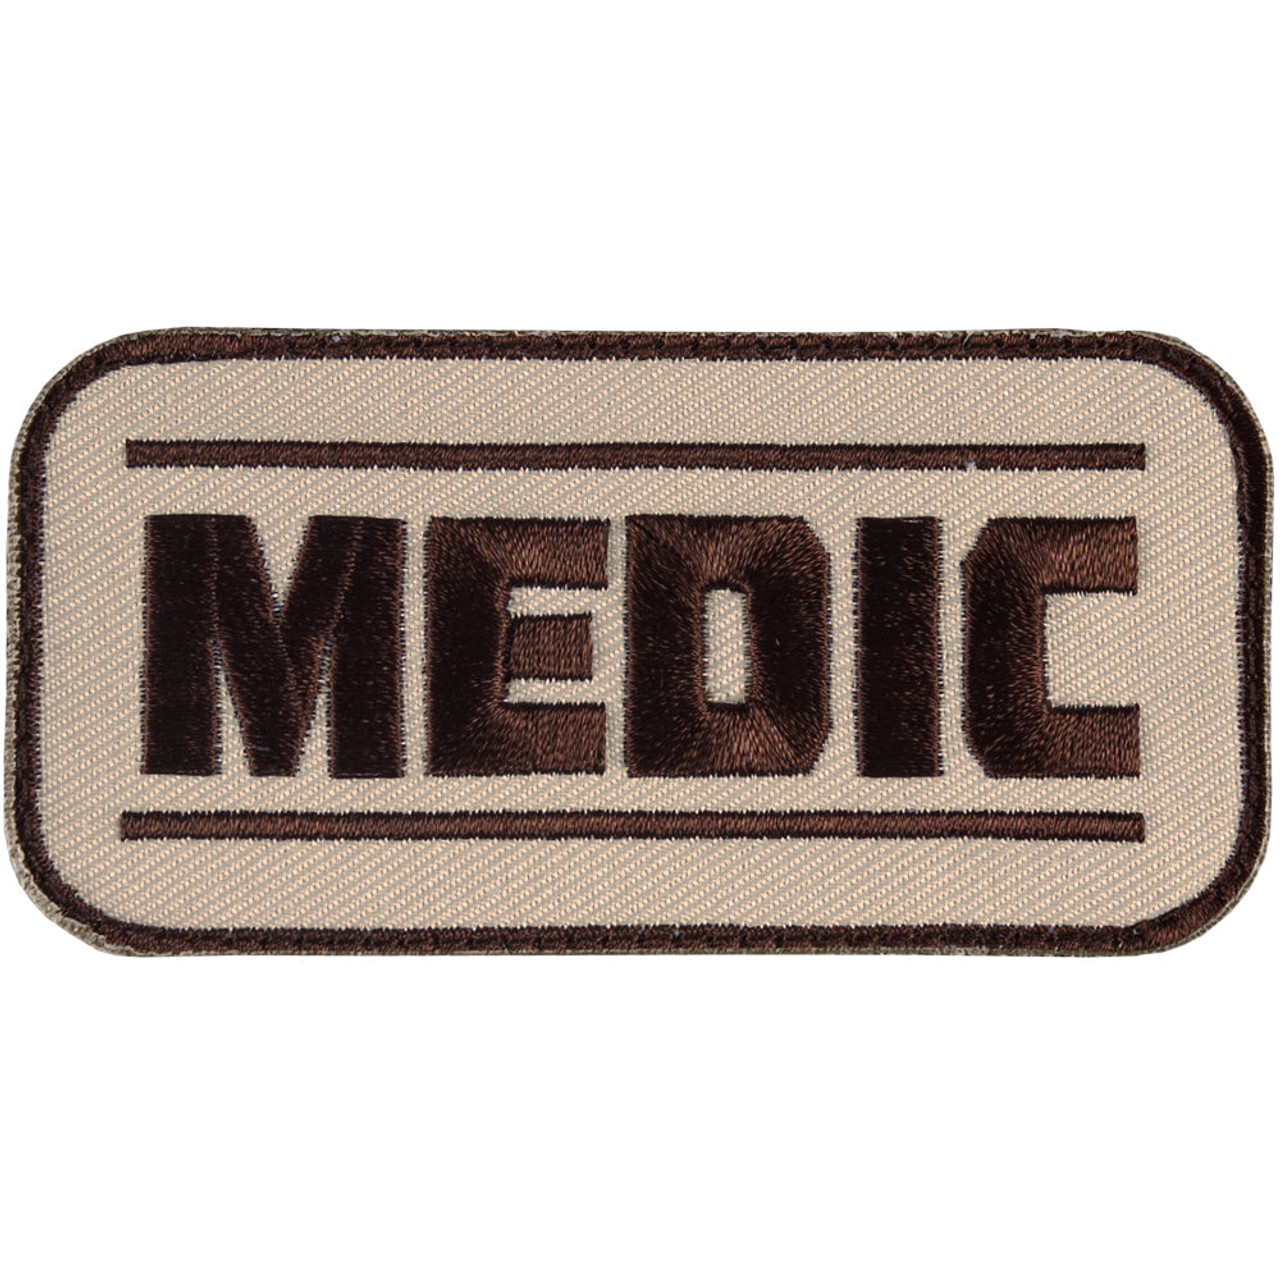 Medic Patch